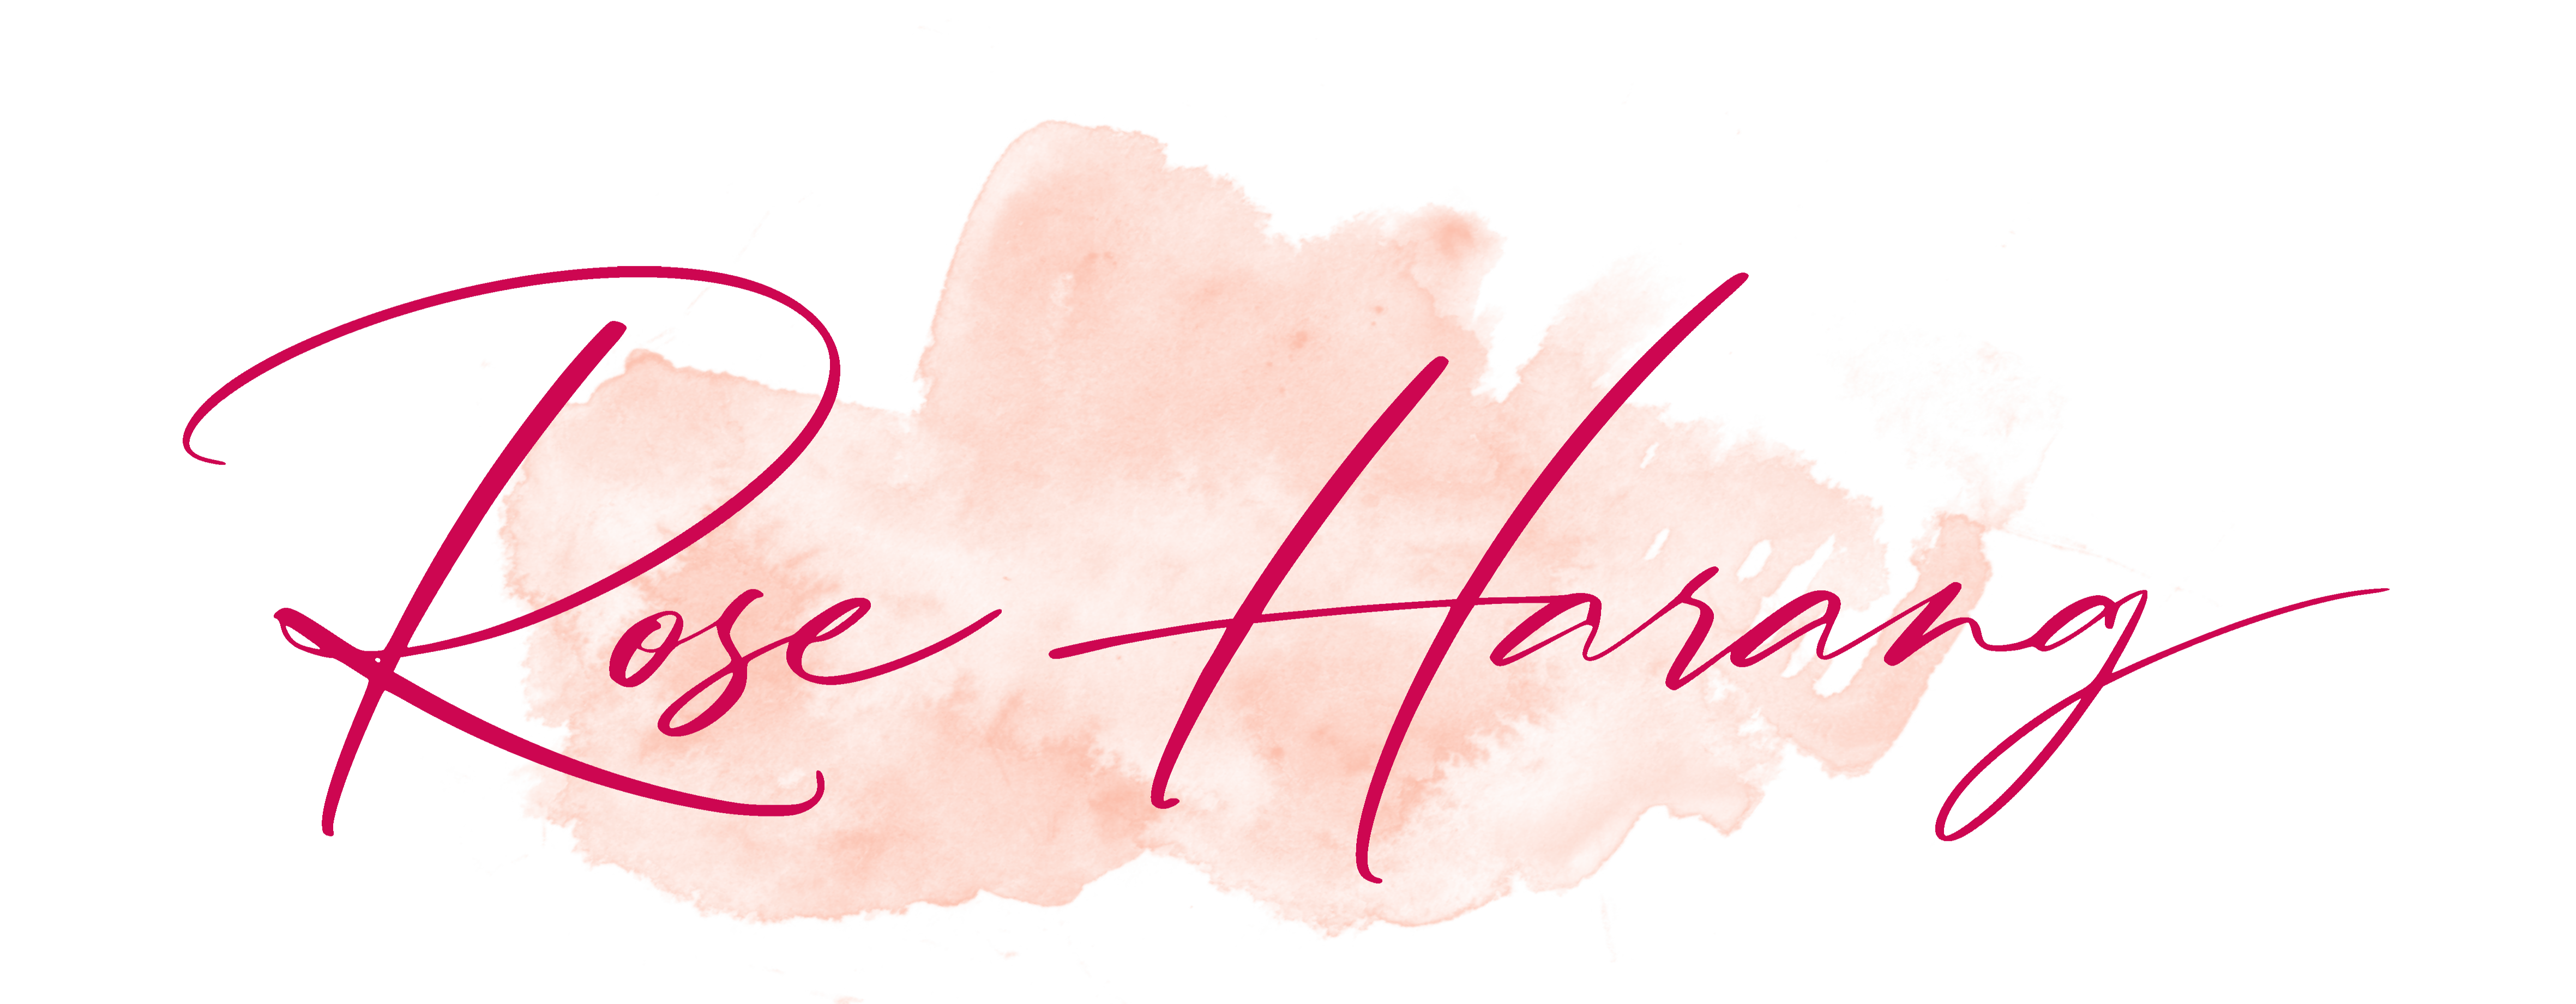 Rose H logo photographe Tours